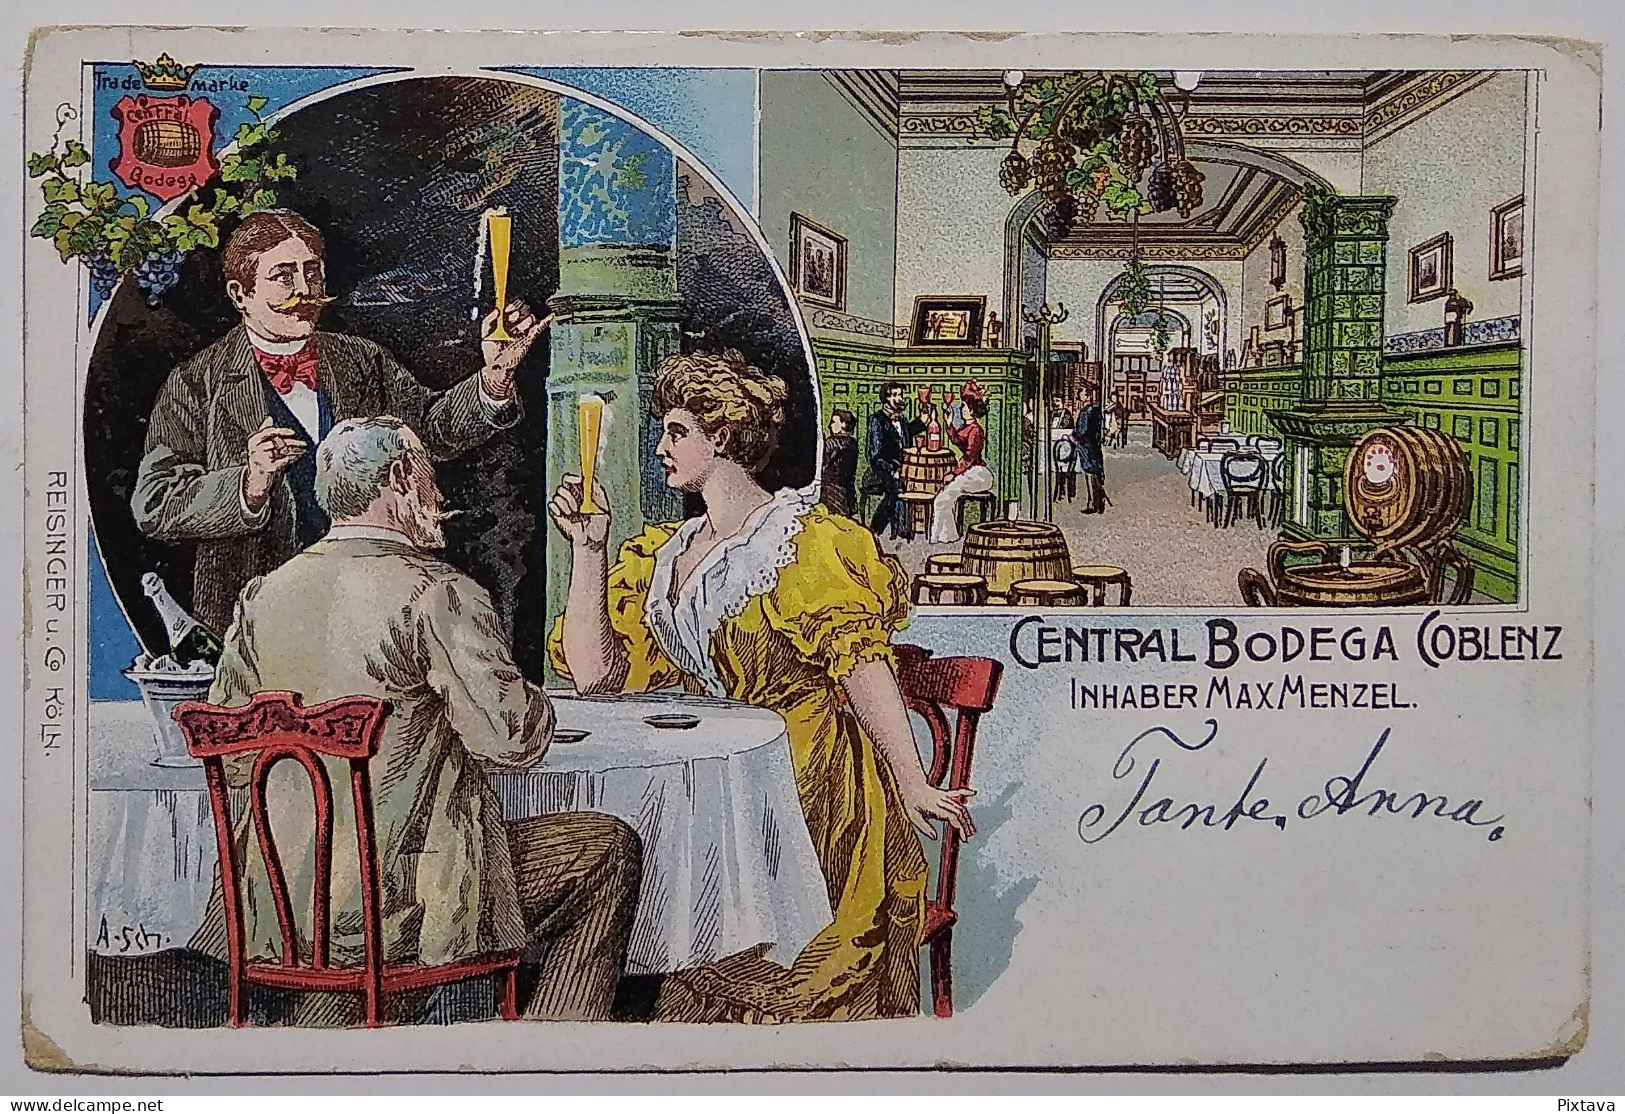 Germany / Central Bodega Coblenz / Inhaber Max Menzel / 1905 / Restaurant / Litho - To Identify